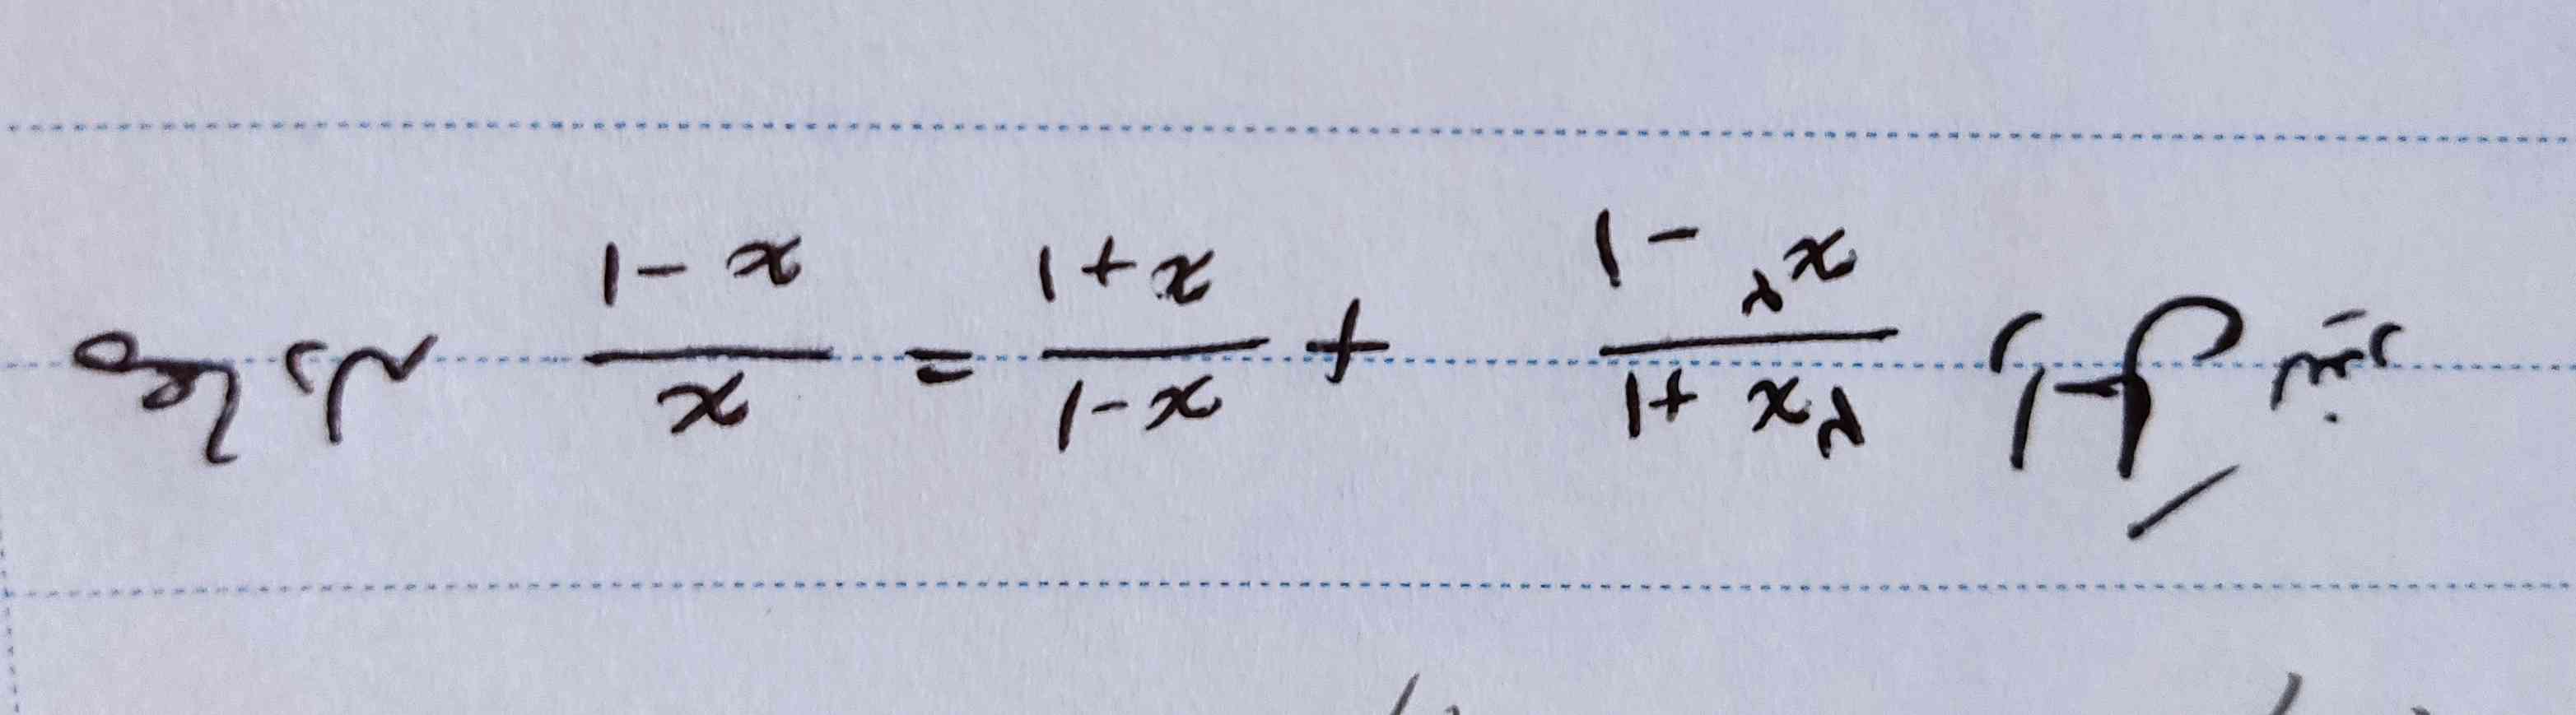 جواب معادله رو کسی می دونه ؟